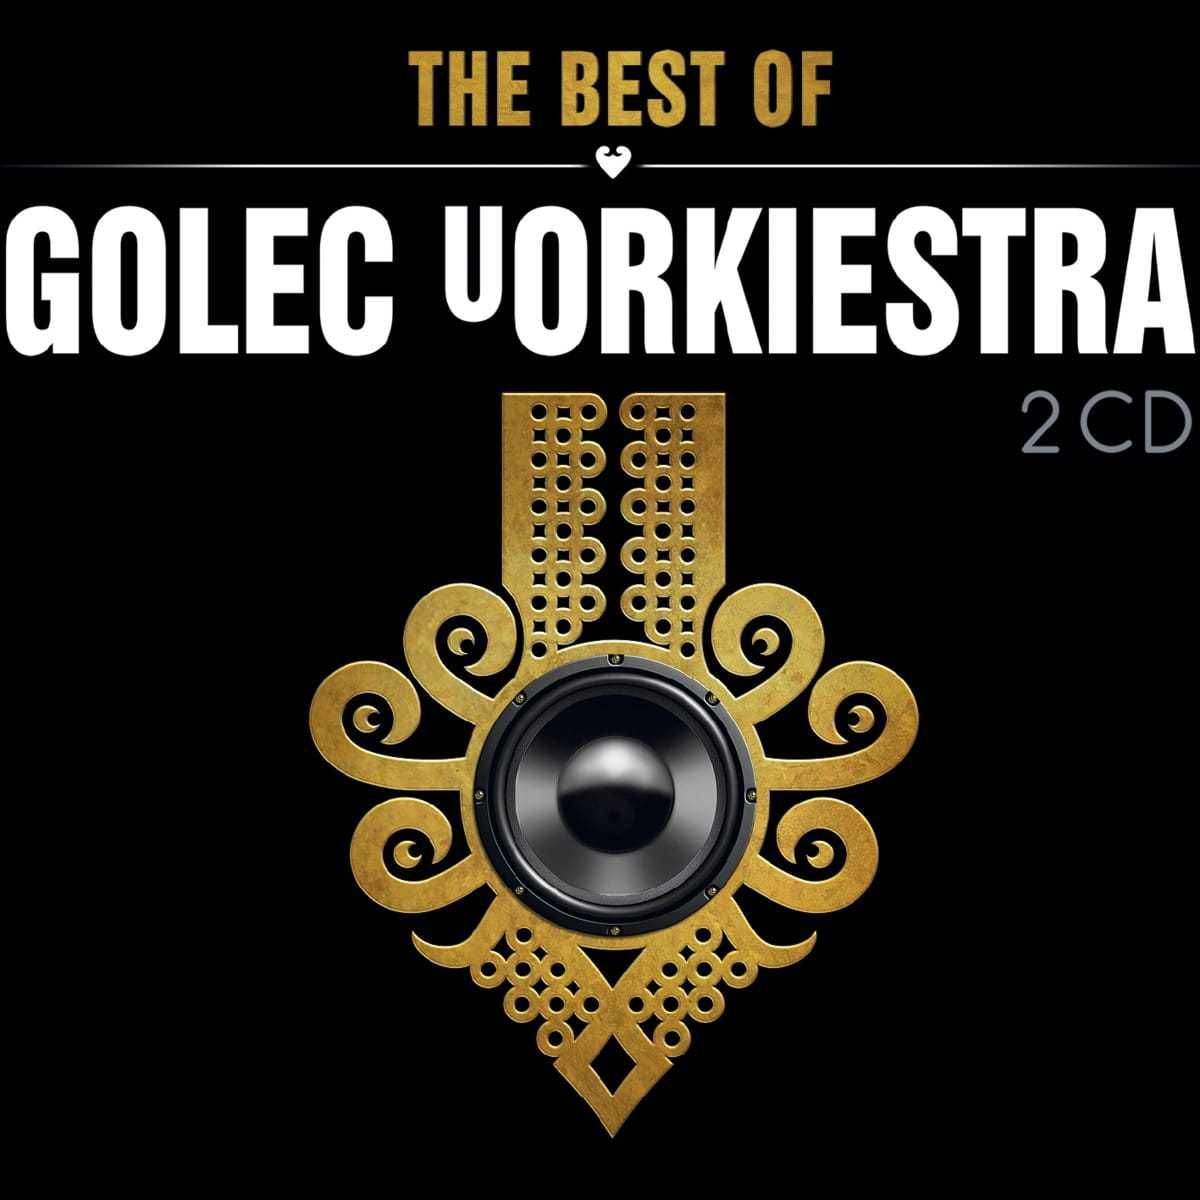 The Best Of Golec Uorkiestra CD